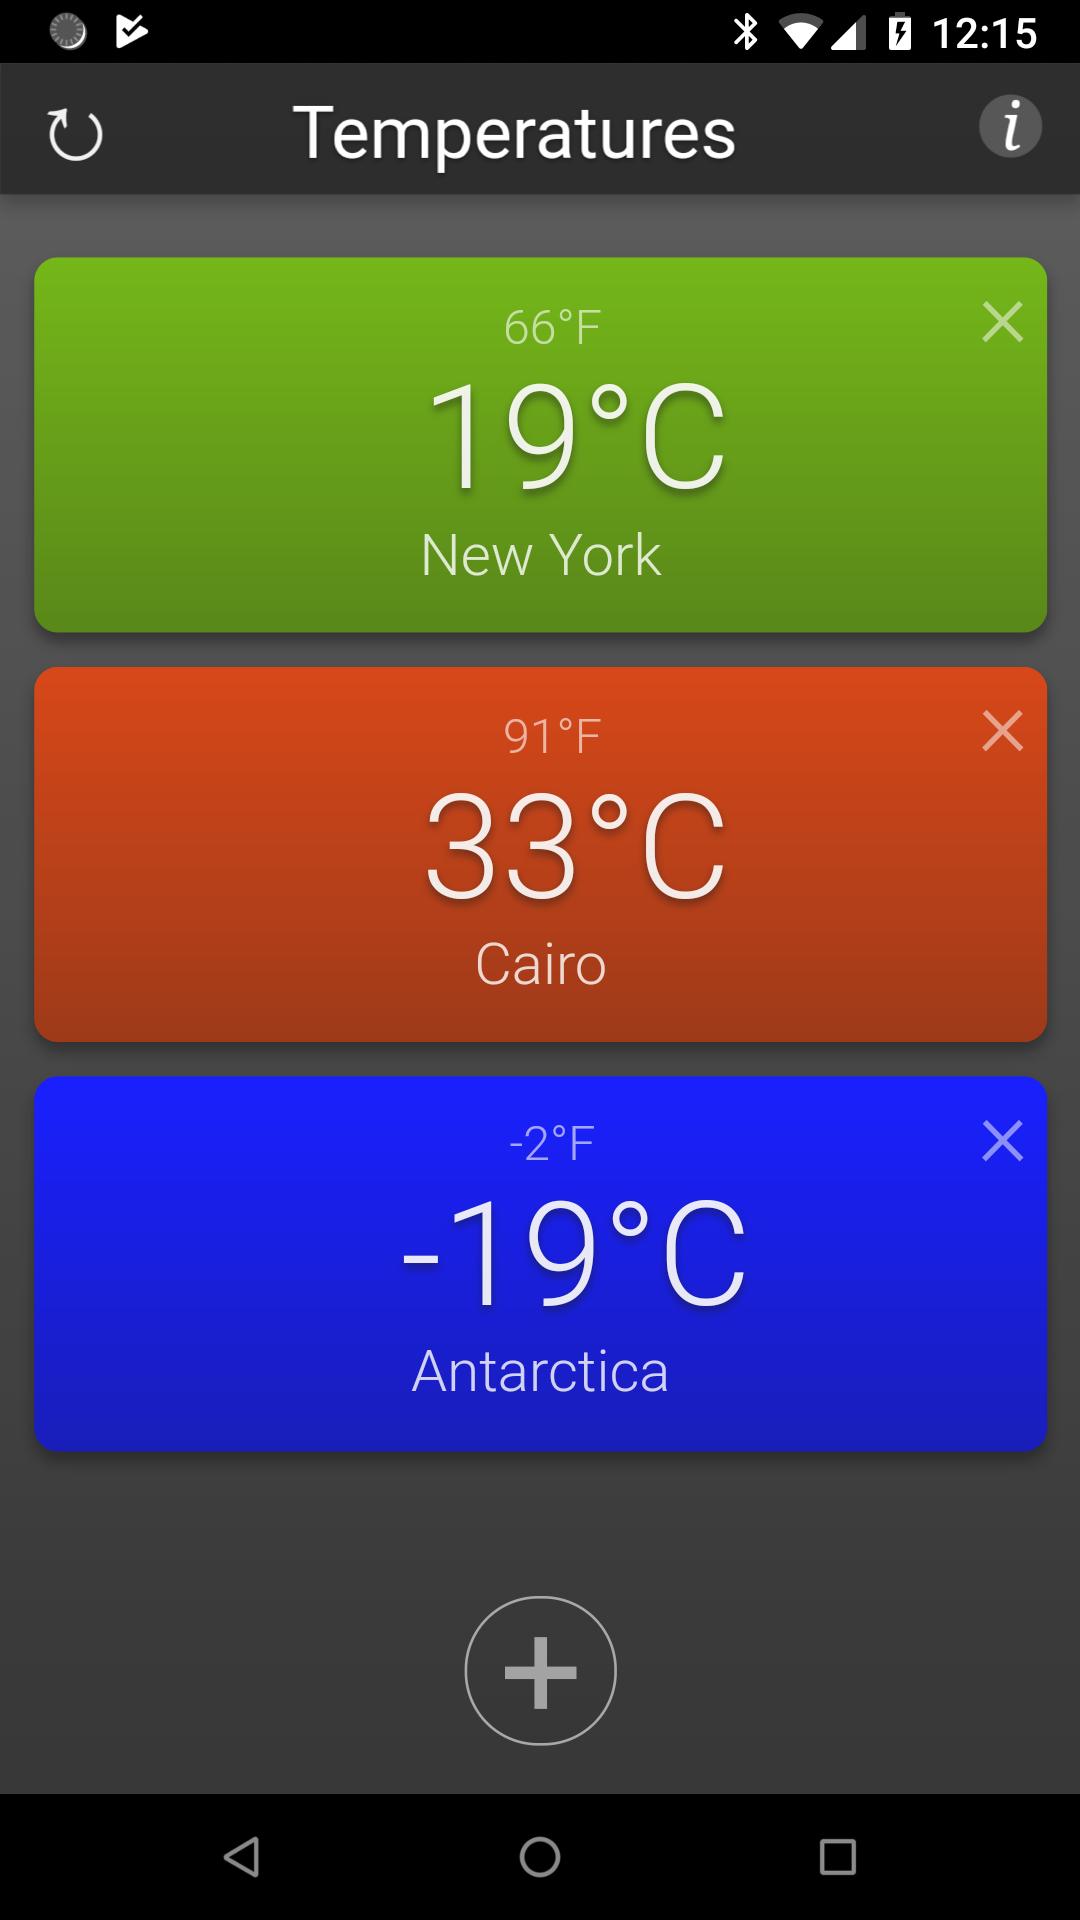 Temps download. -4 Температура на андроиде. Room temperature Android.